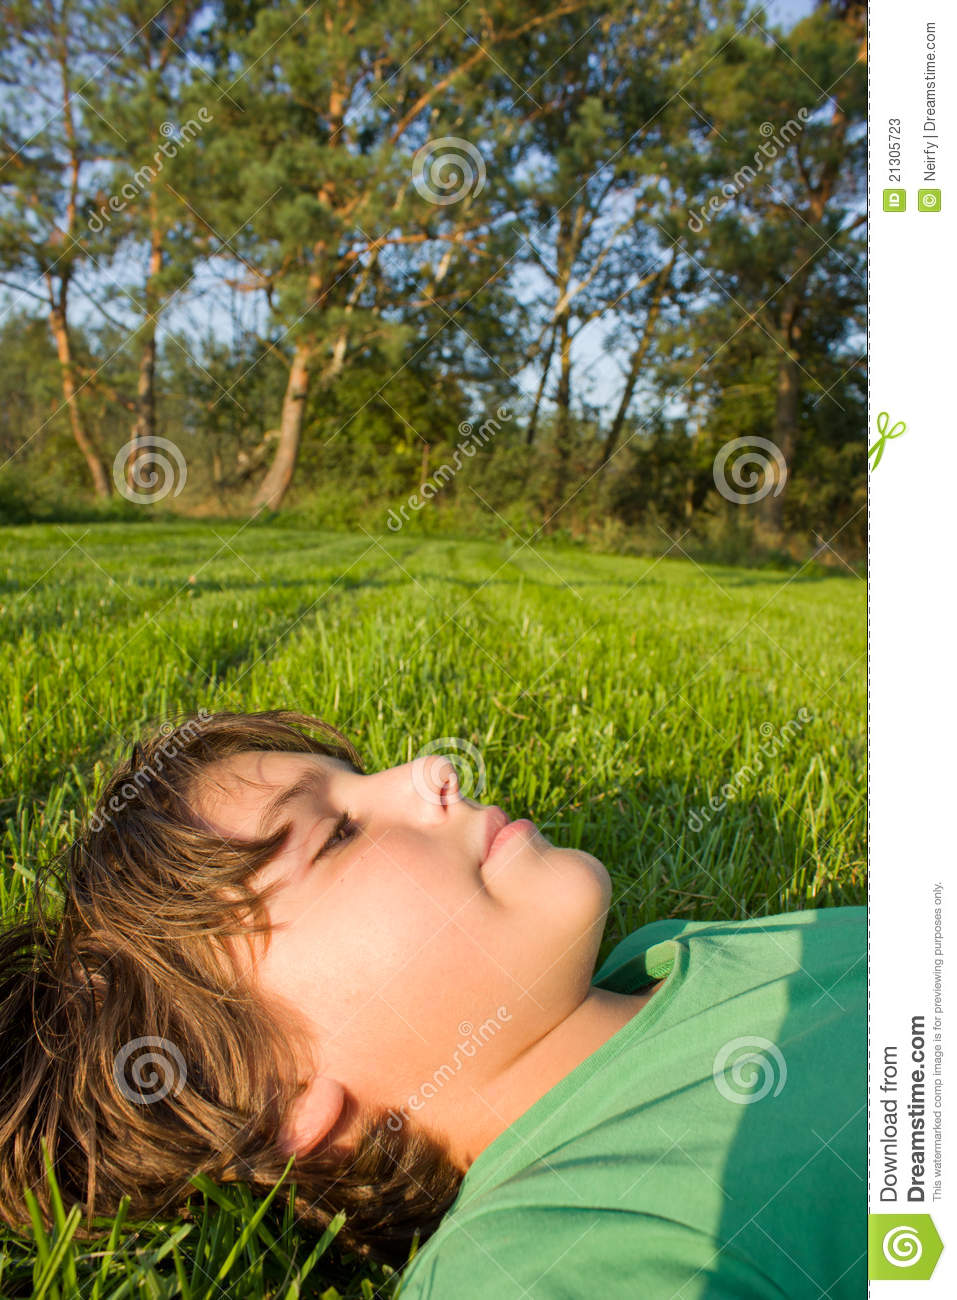 Boy Relaxing On Grass Stock Photos   Image  21305723